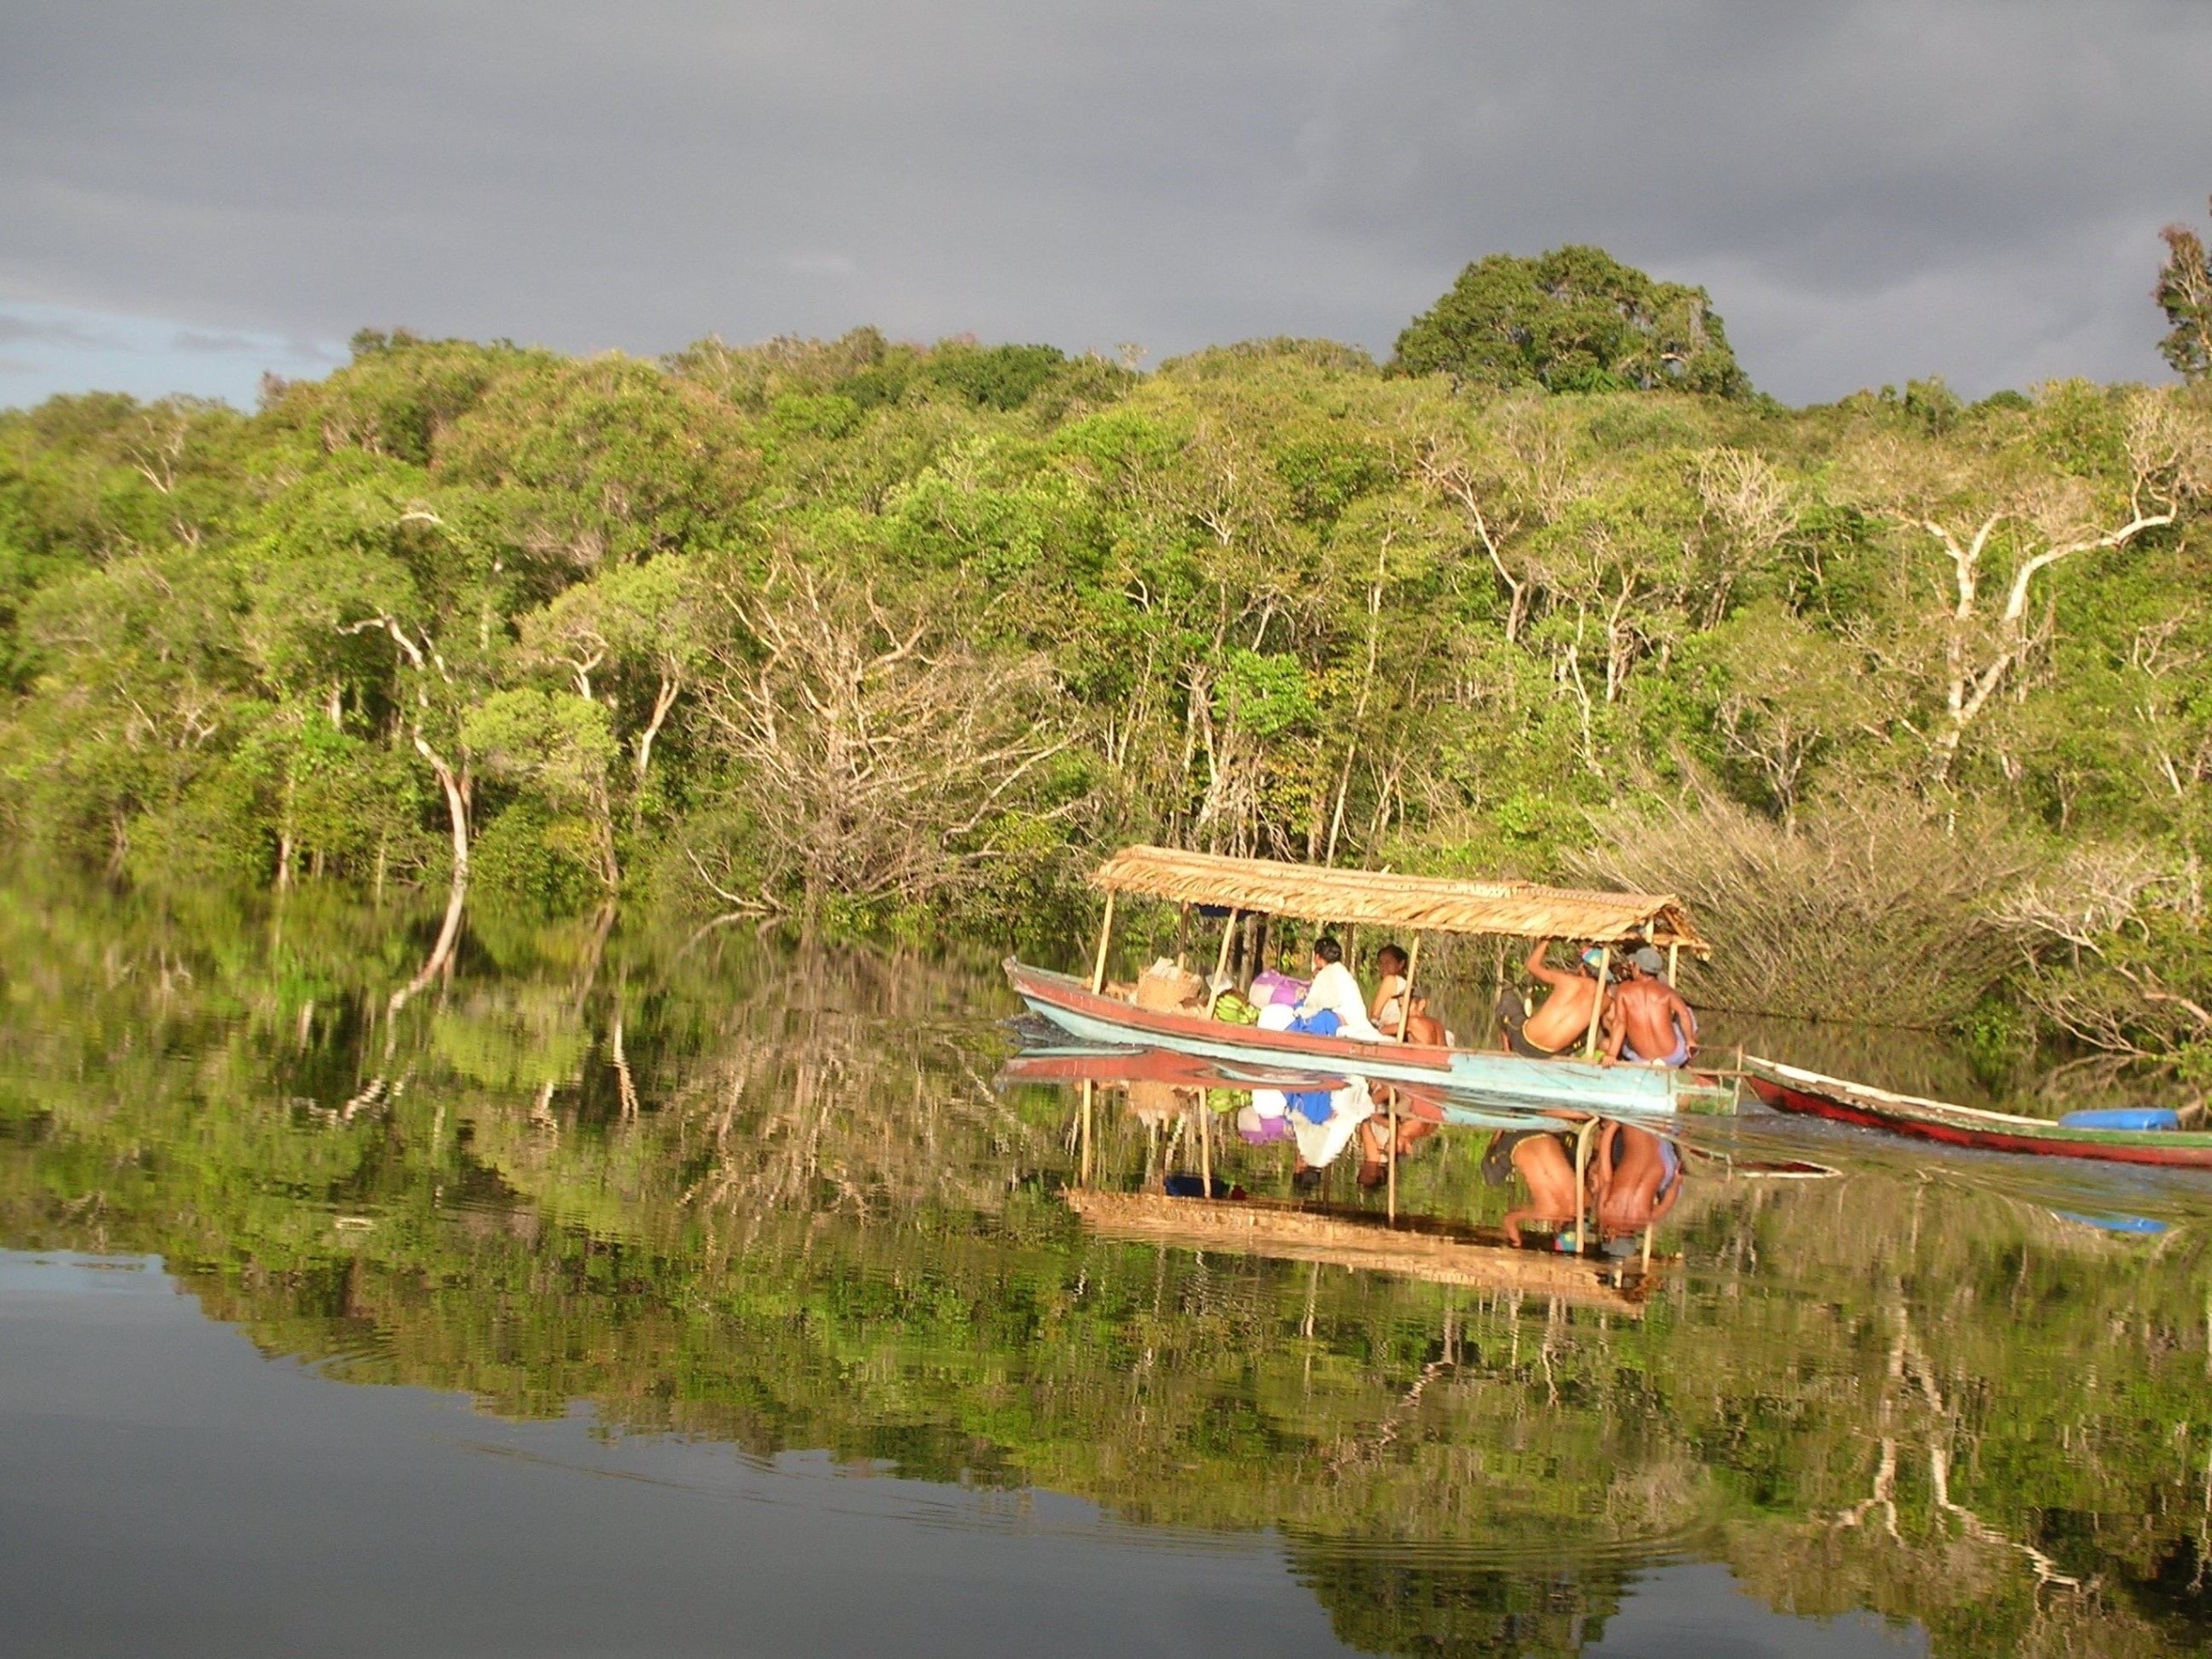 #brazil #river #amazon #rainforest #blue #reflection #green
2009